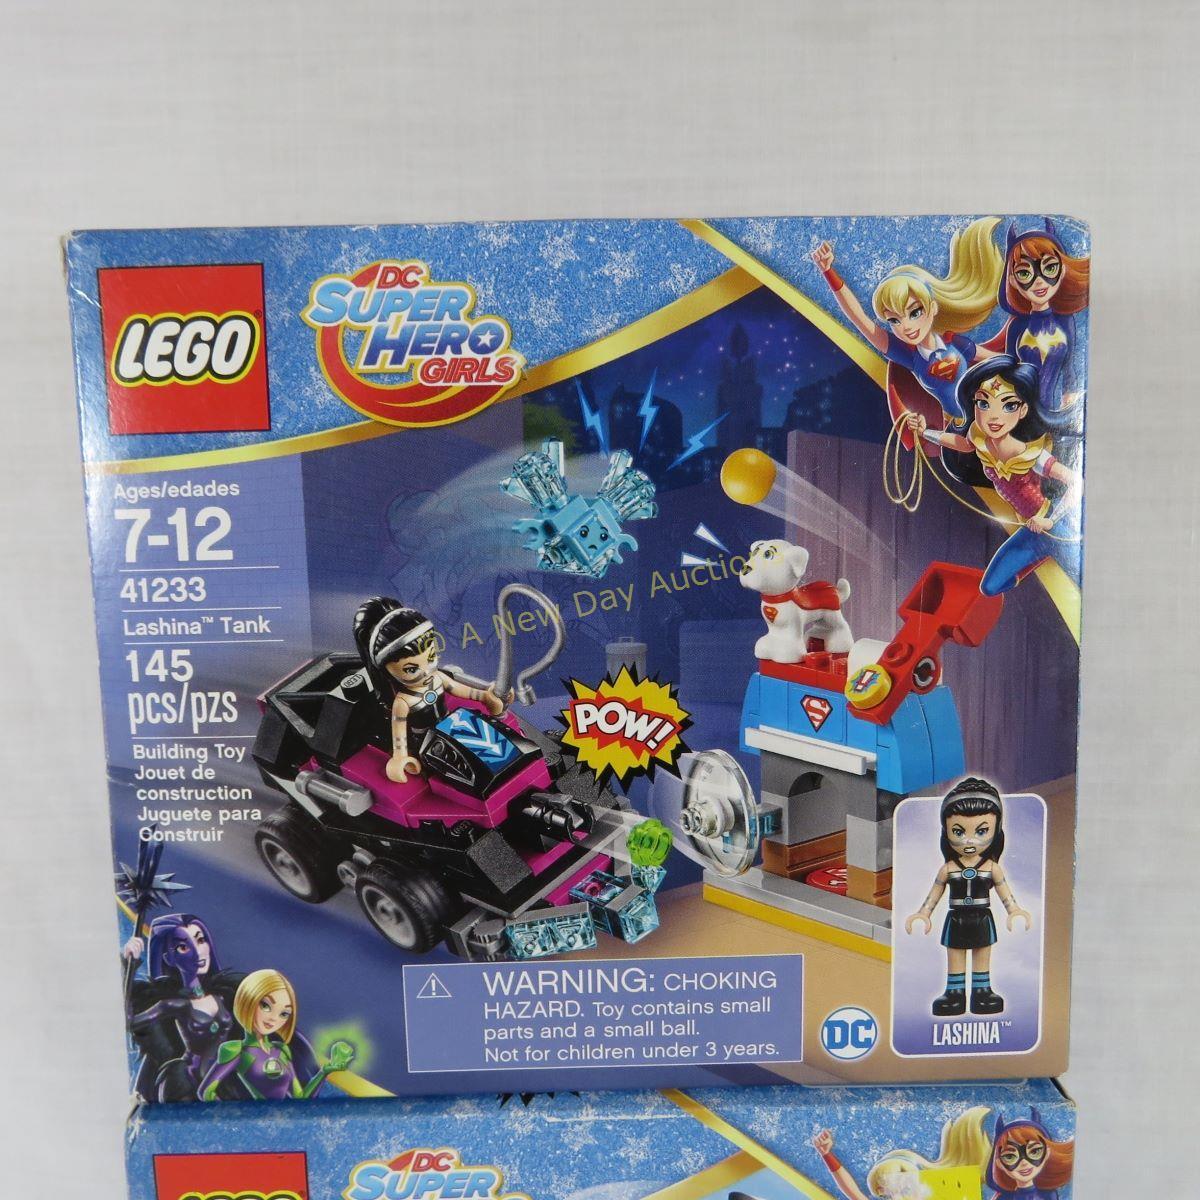 2 New Lego DC Super Hero Girl Sets